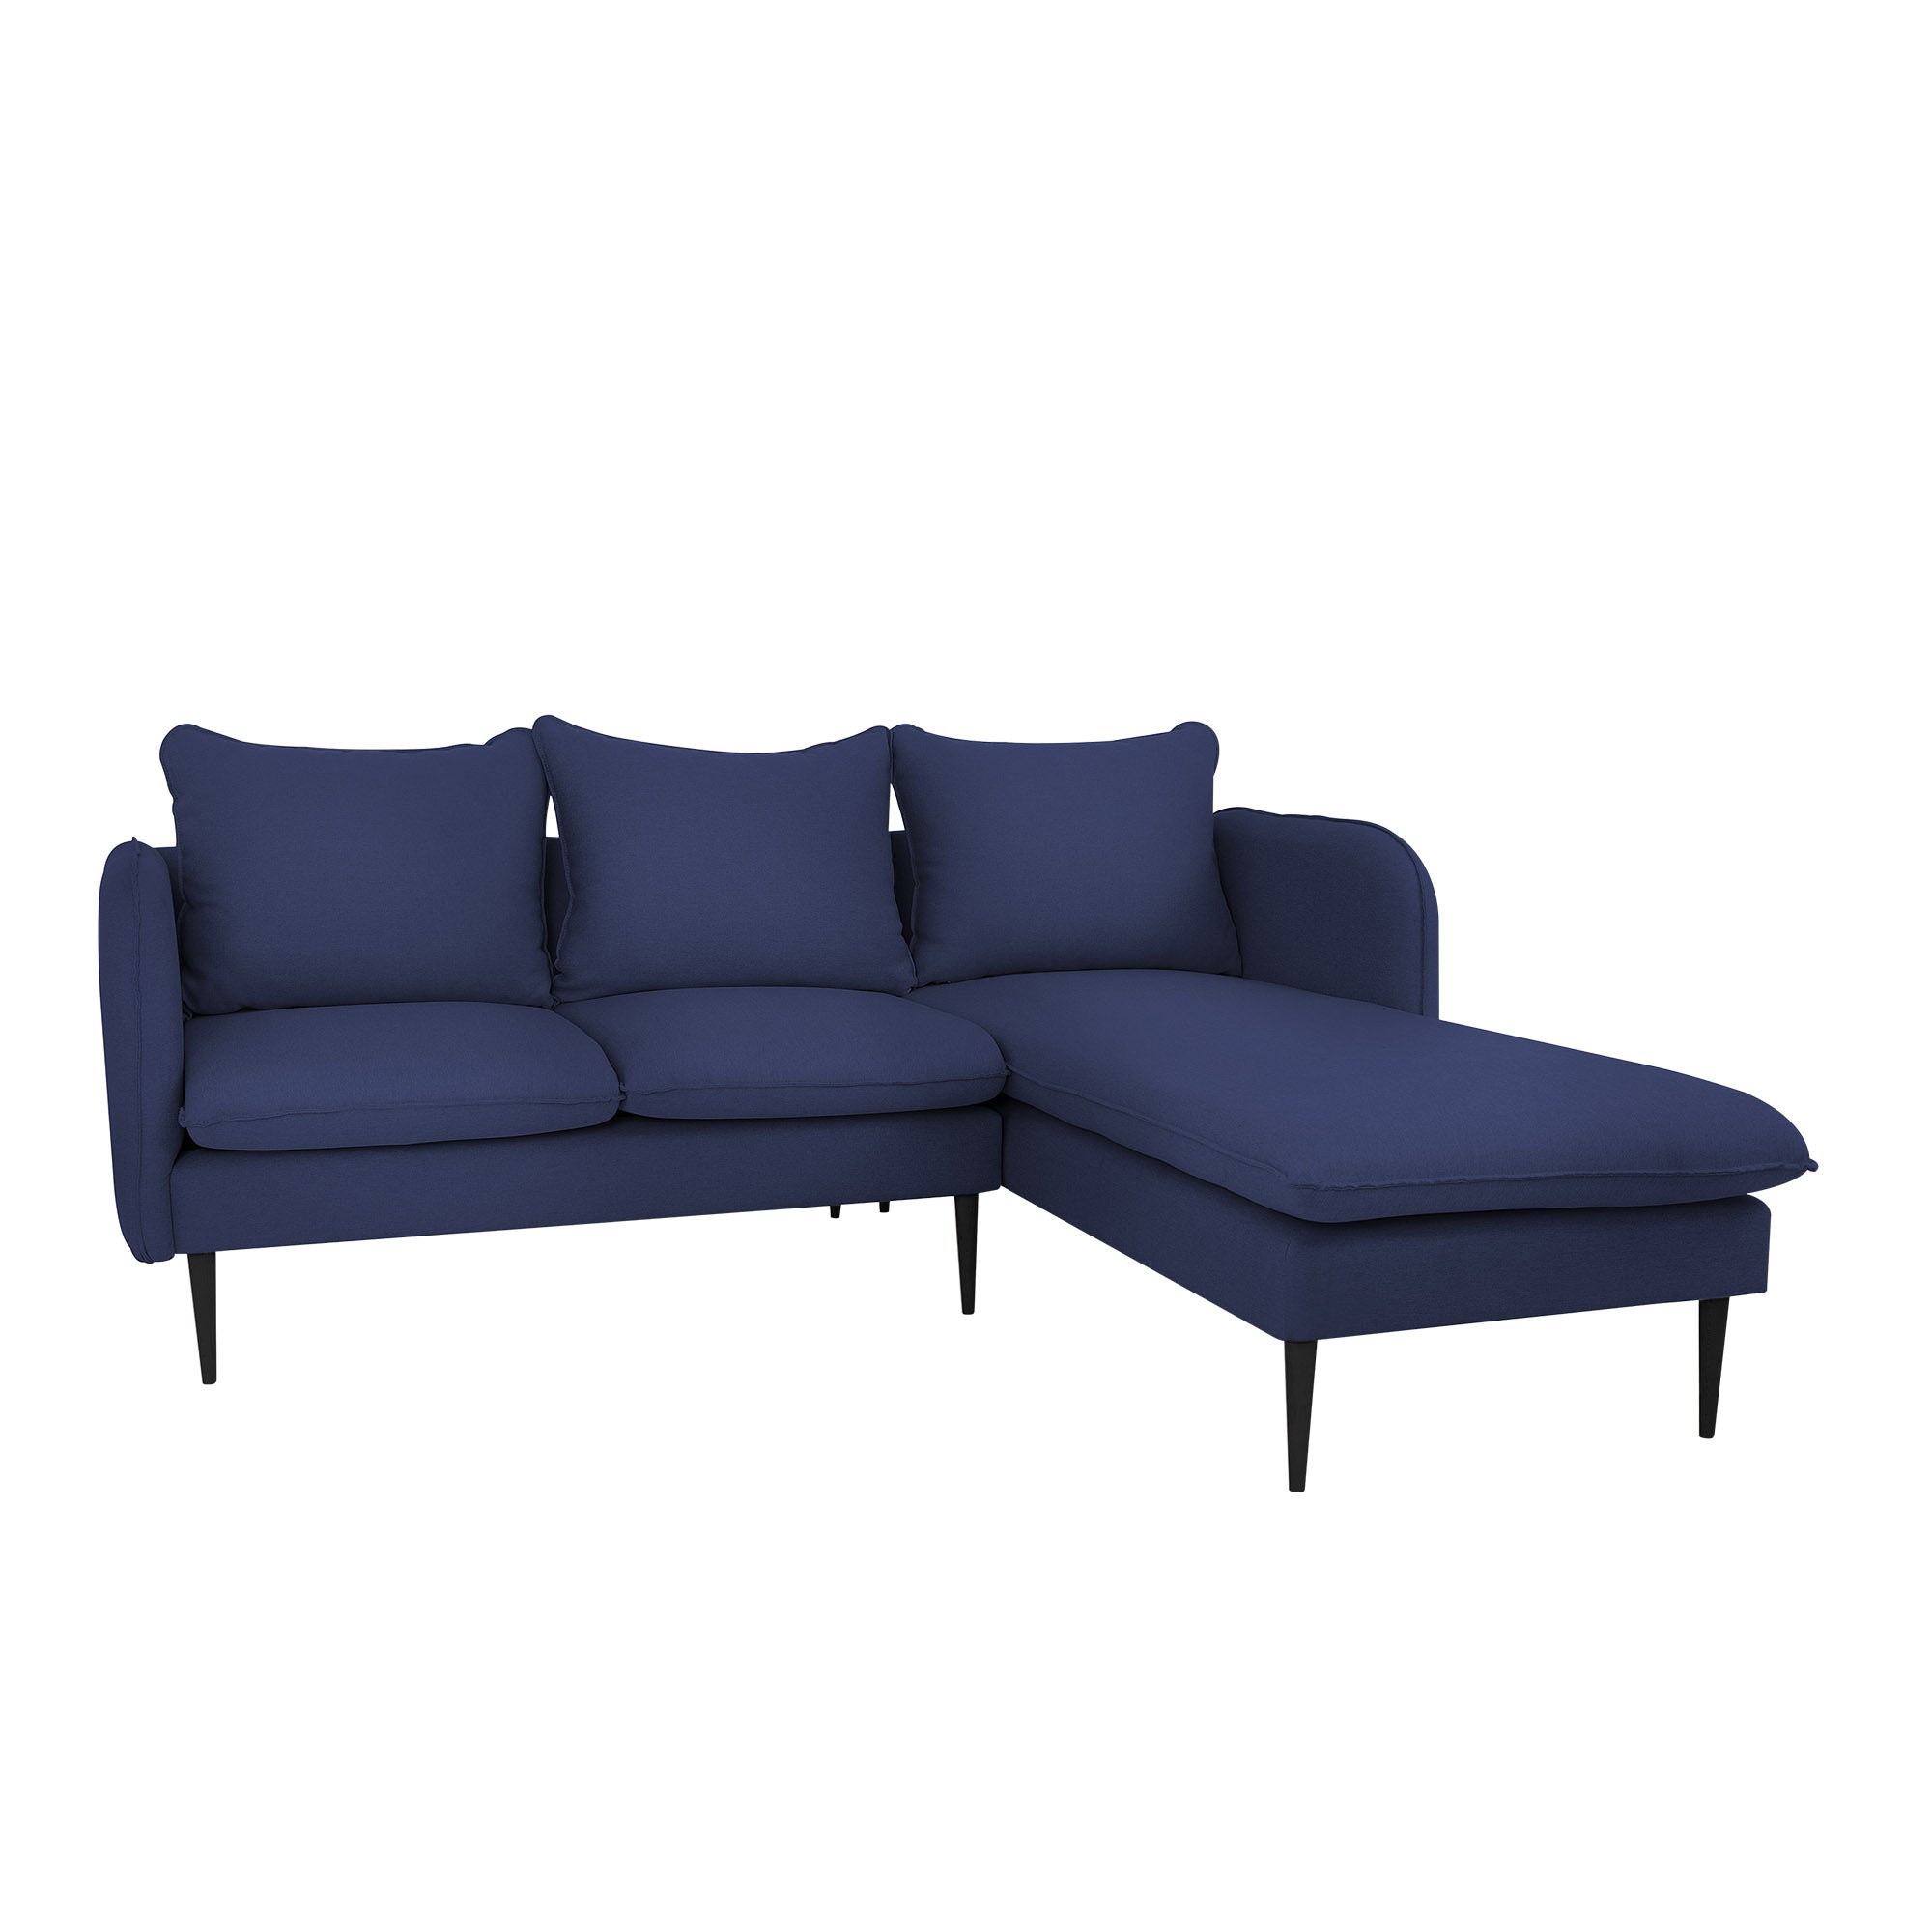 POSH BLACK Corner Sofa Right upholstery colour blue white background